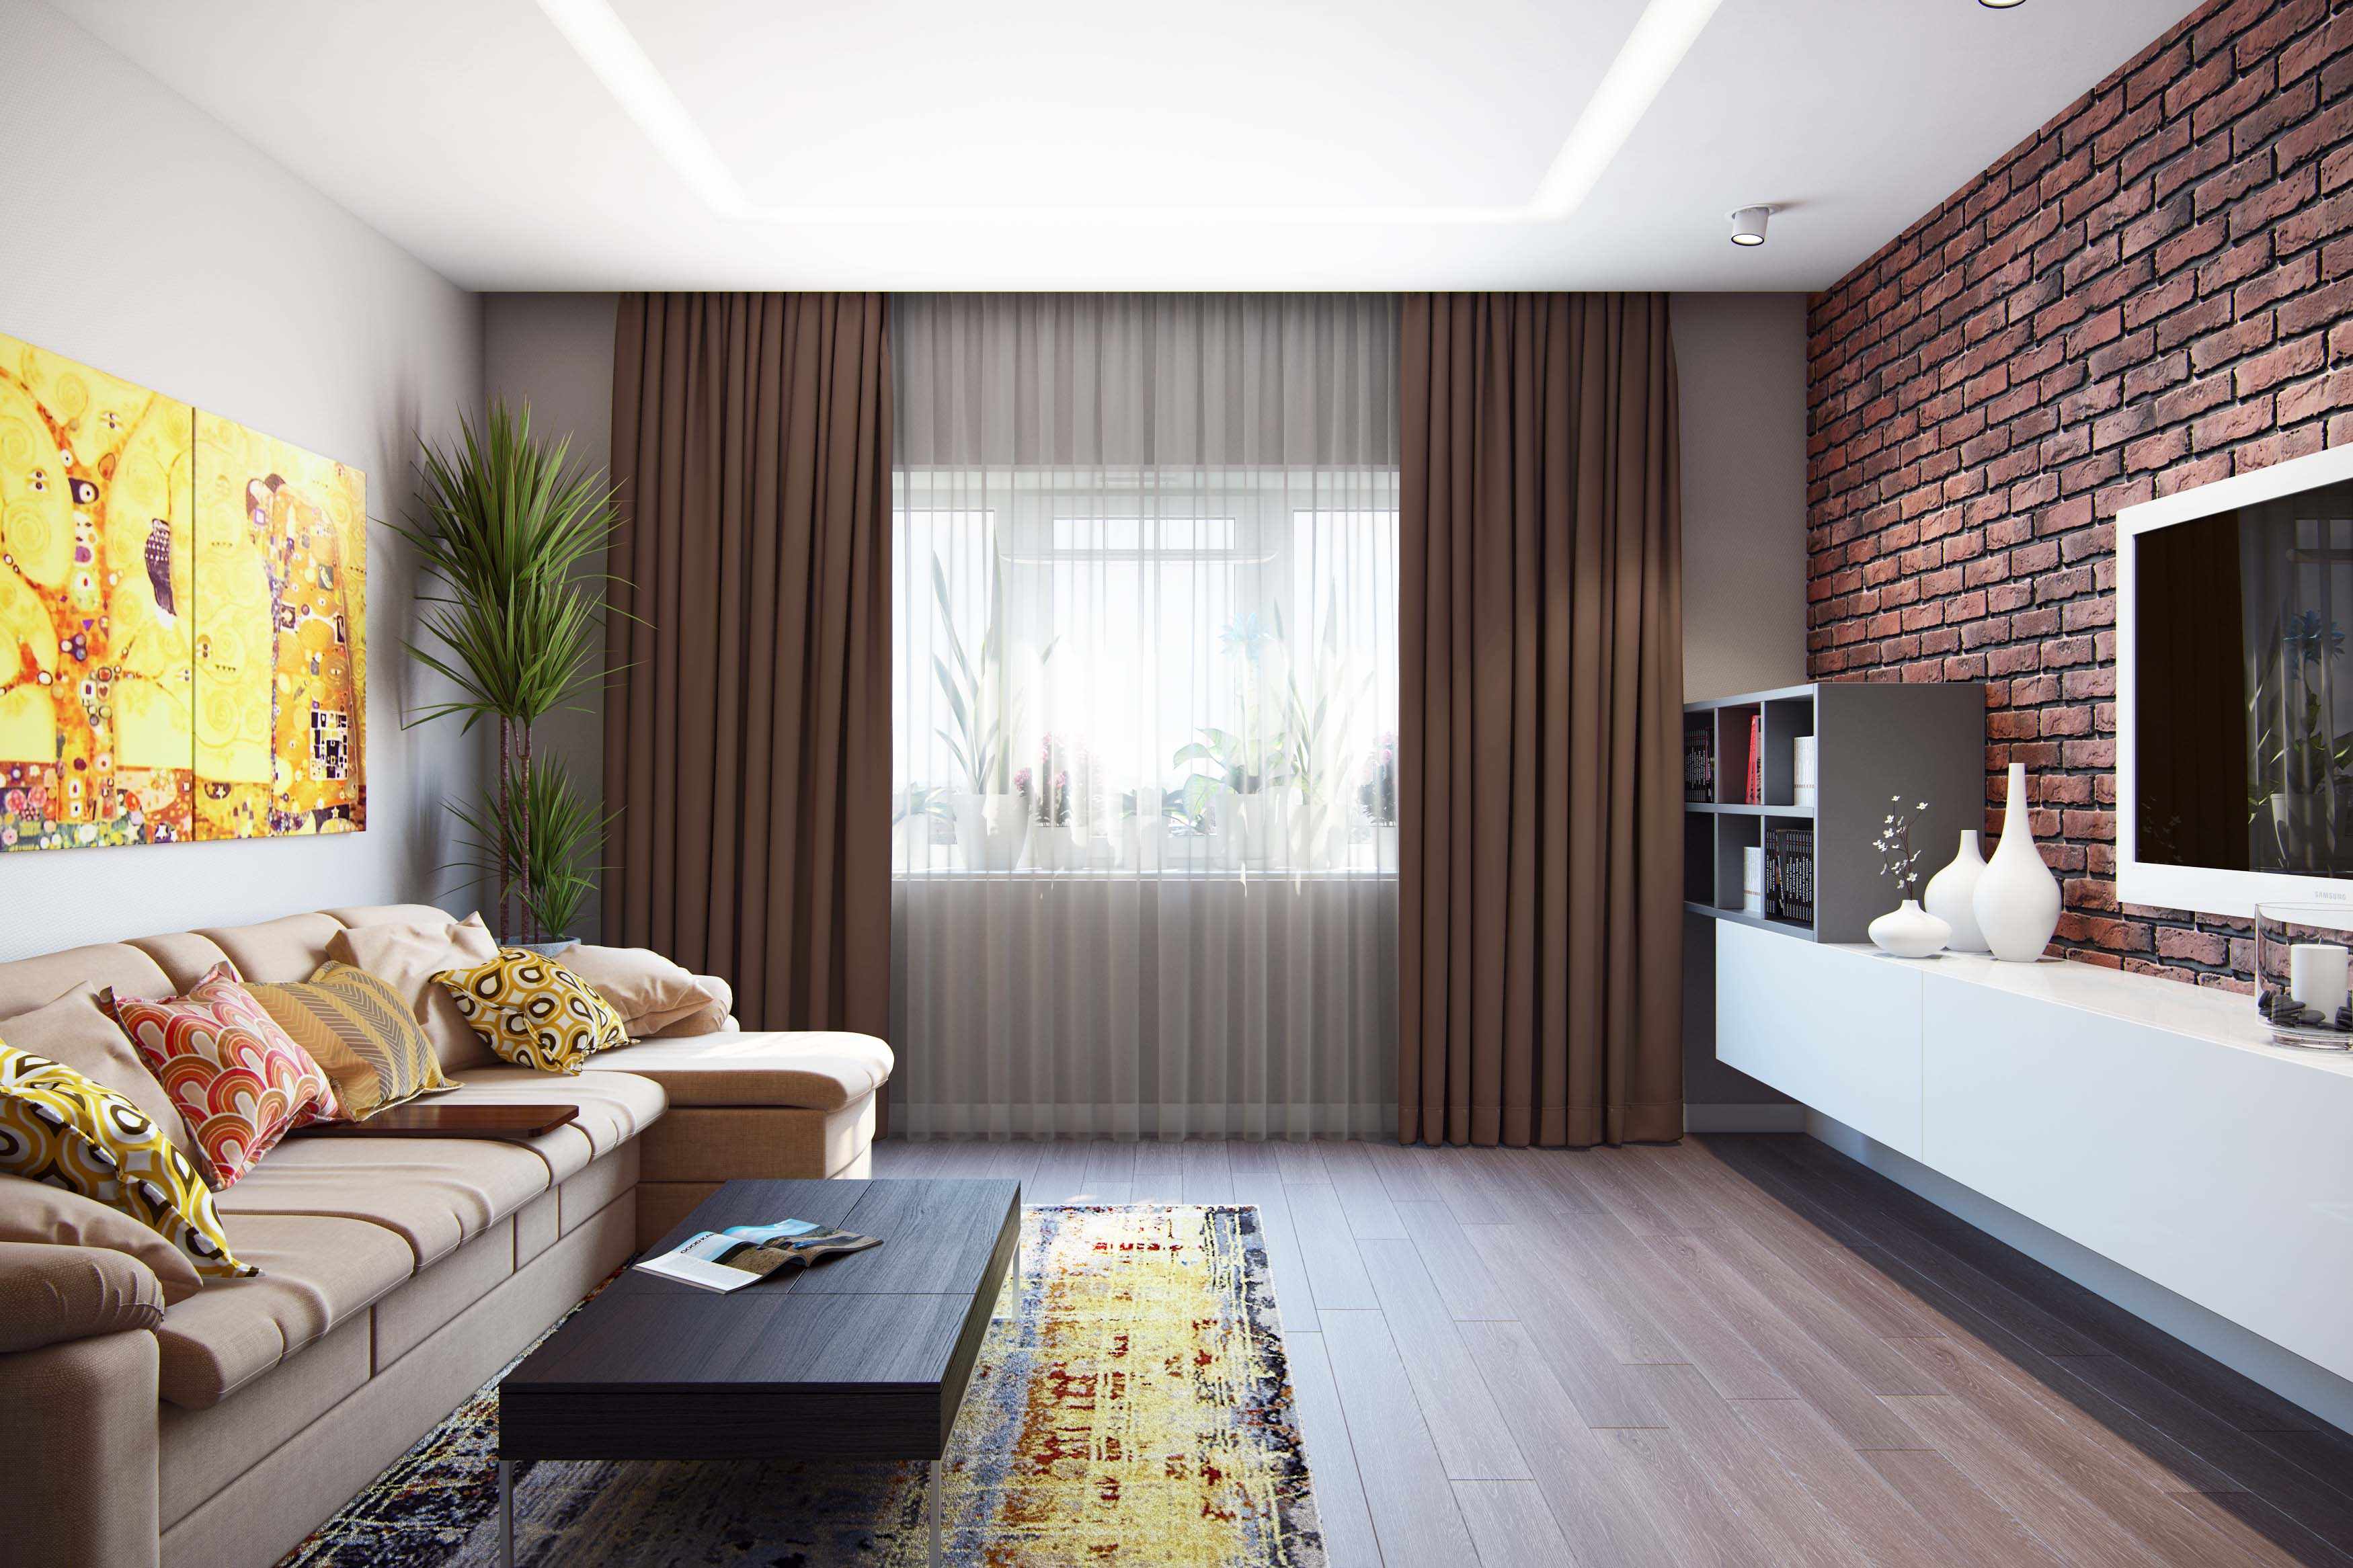 the idea of ​​a bright interior living room 19-20 sq.m